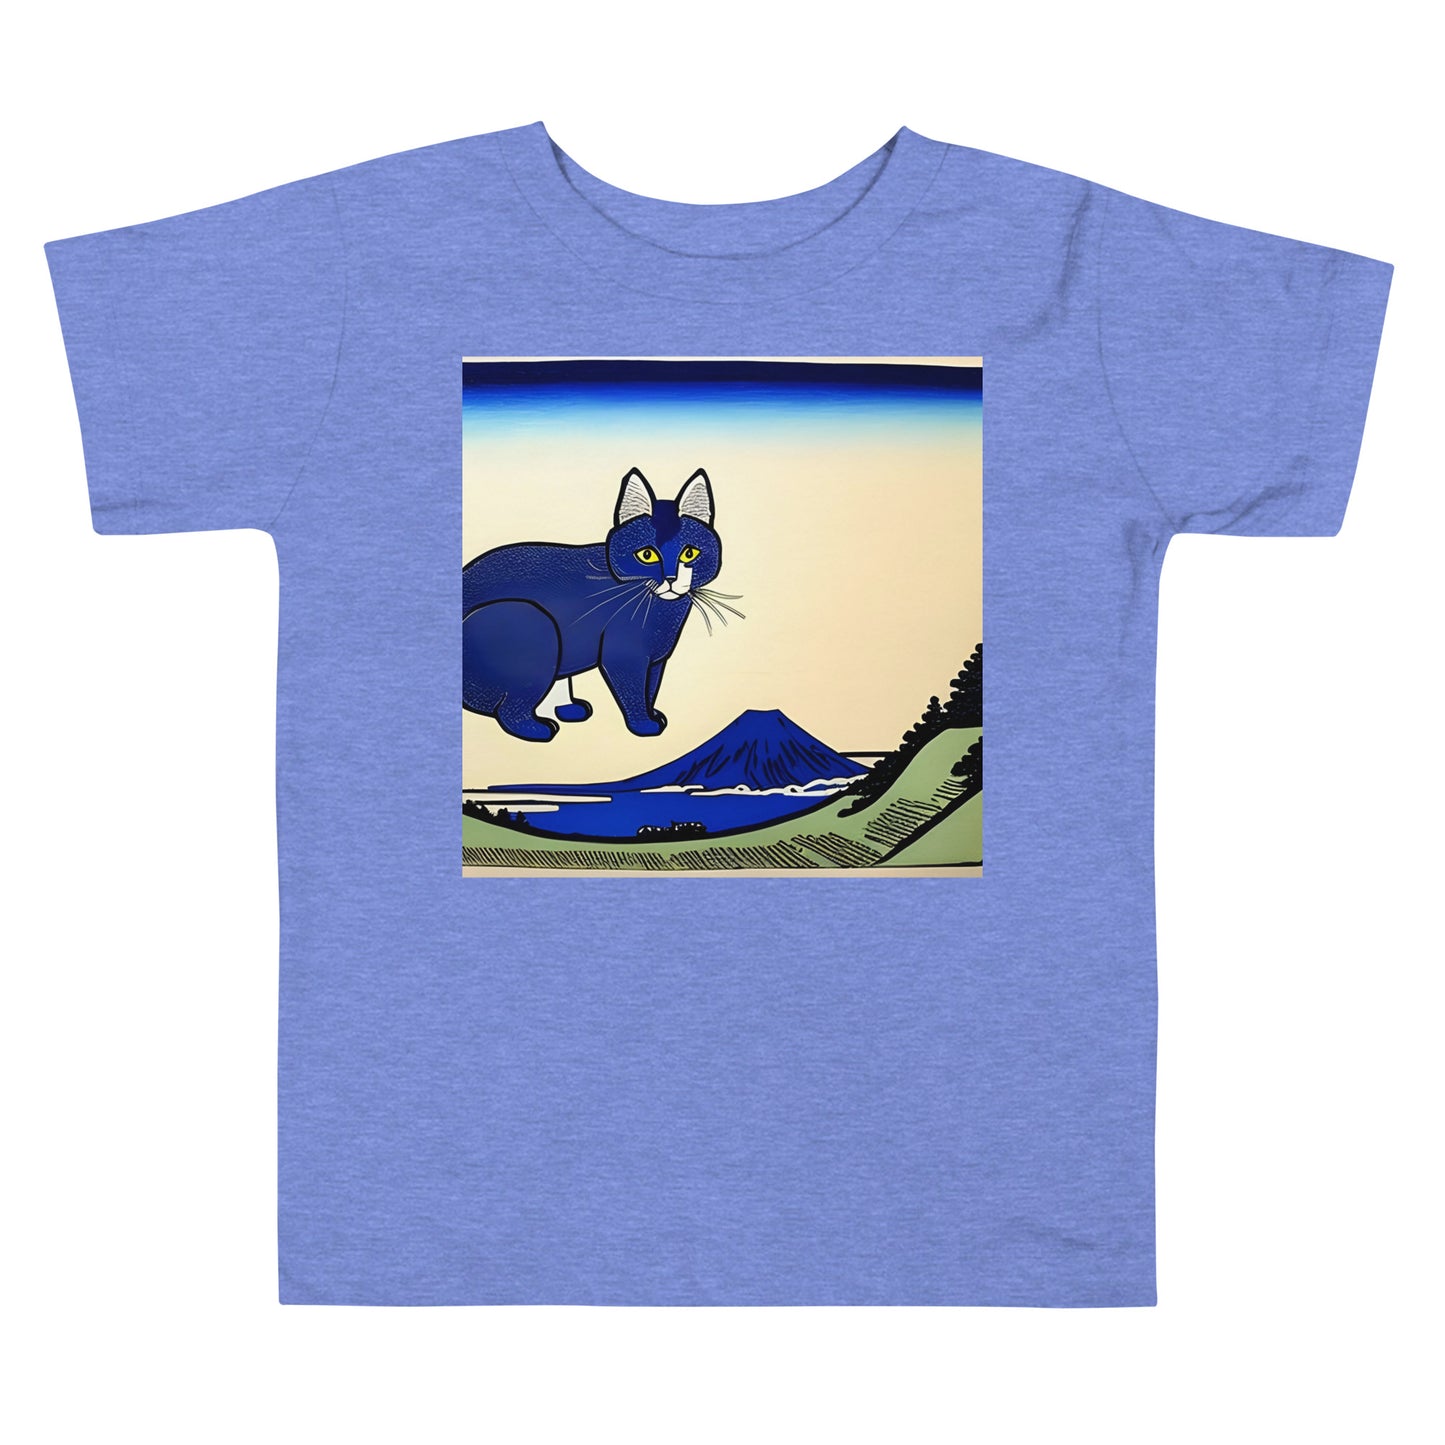 Meowsome Toddler's T-Shirt - 022